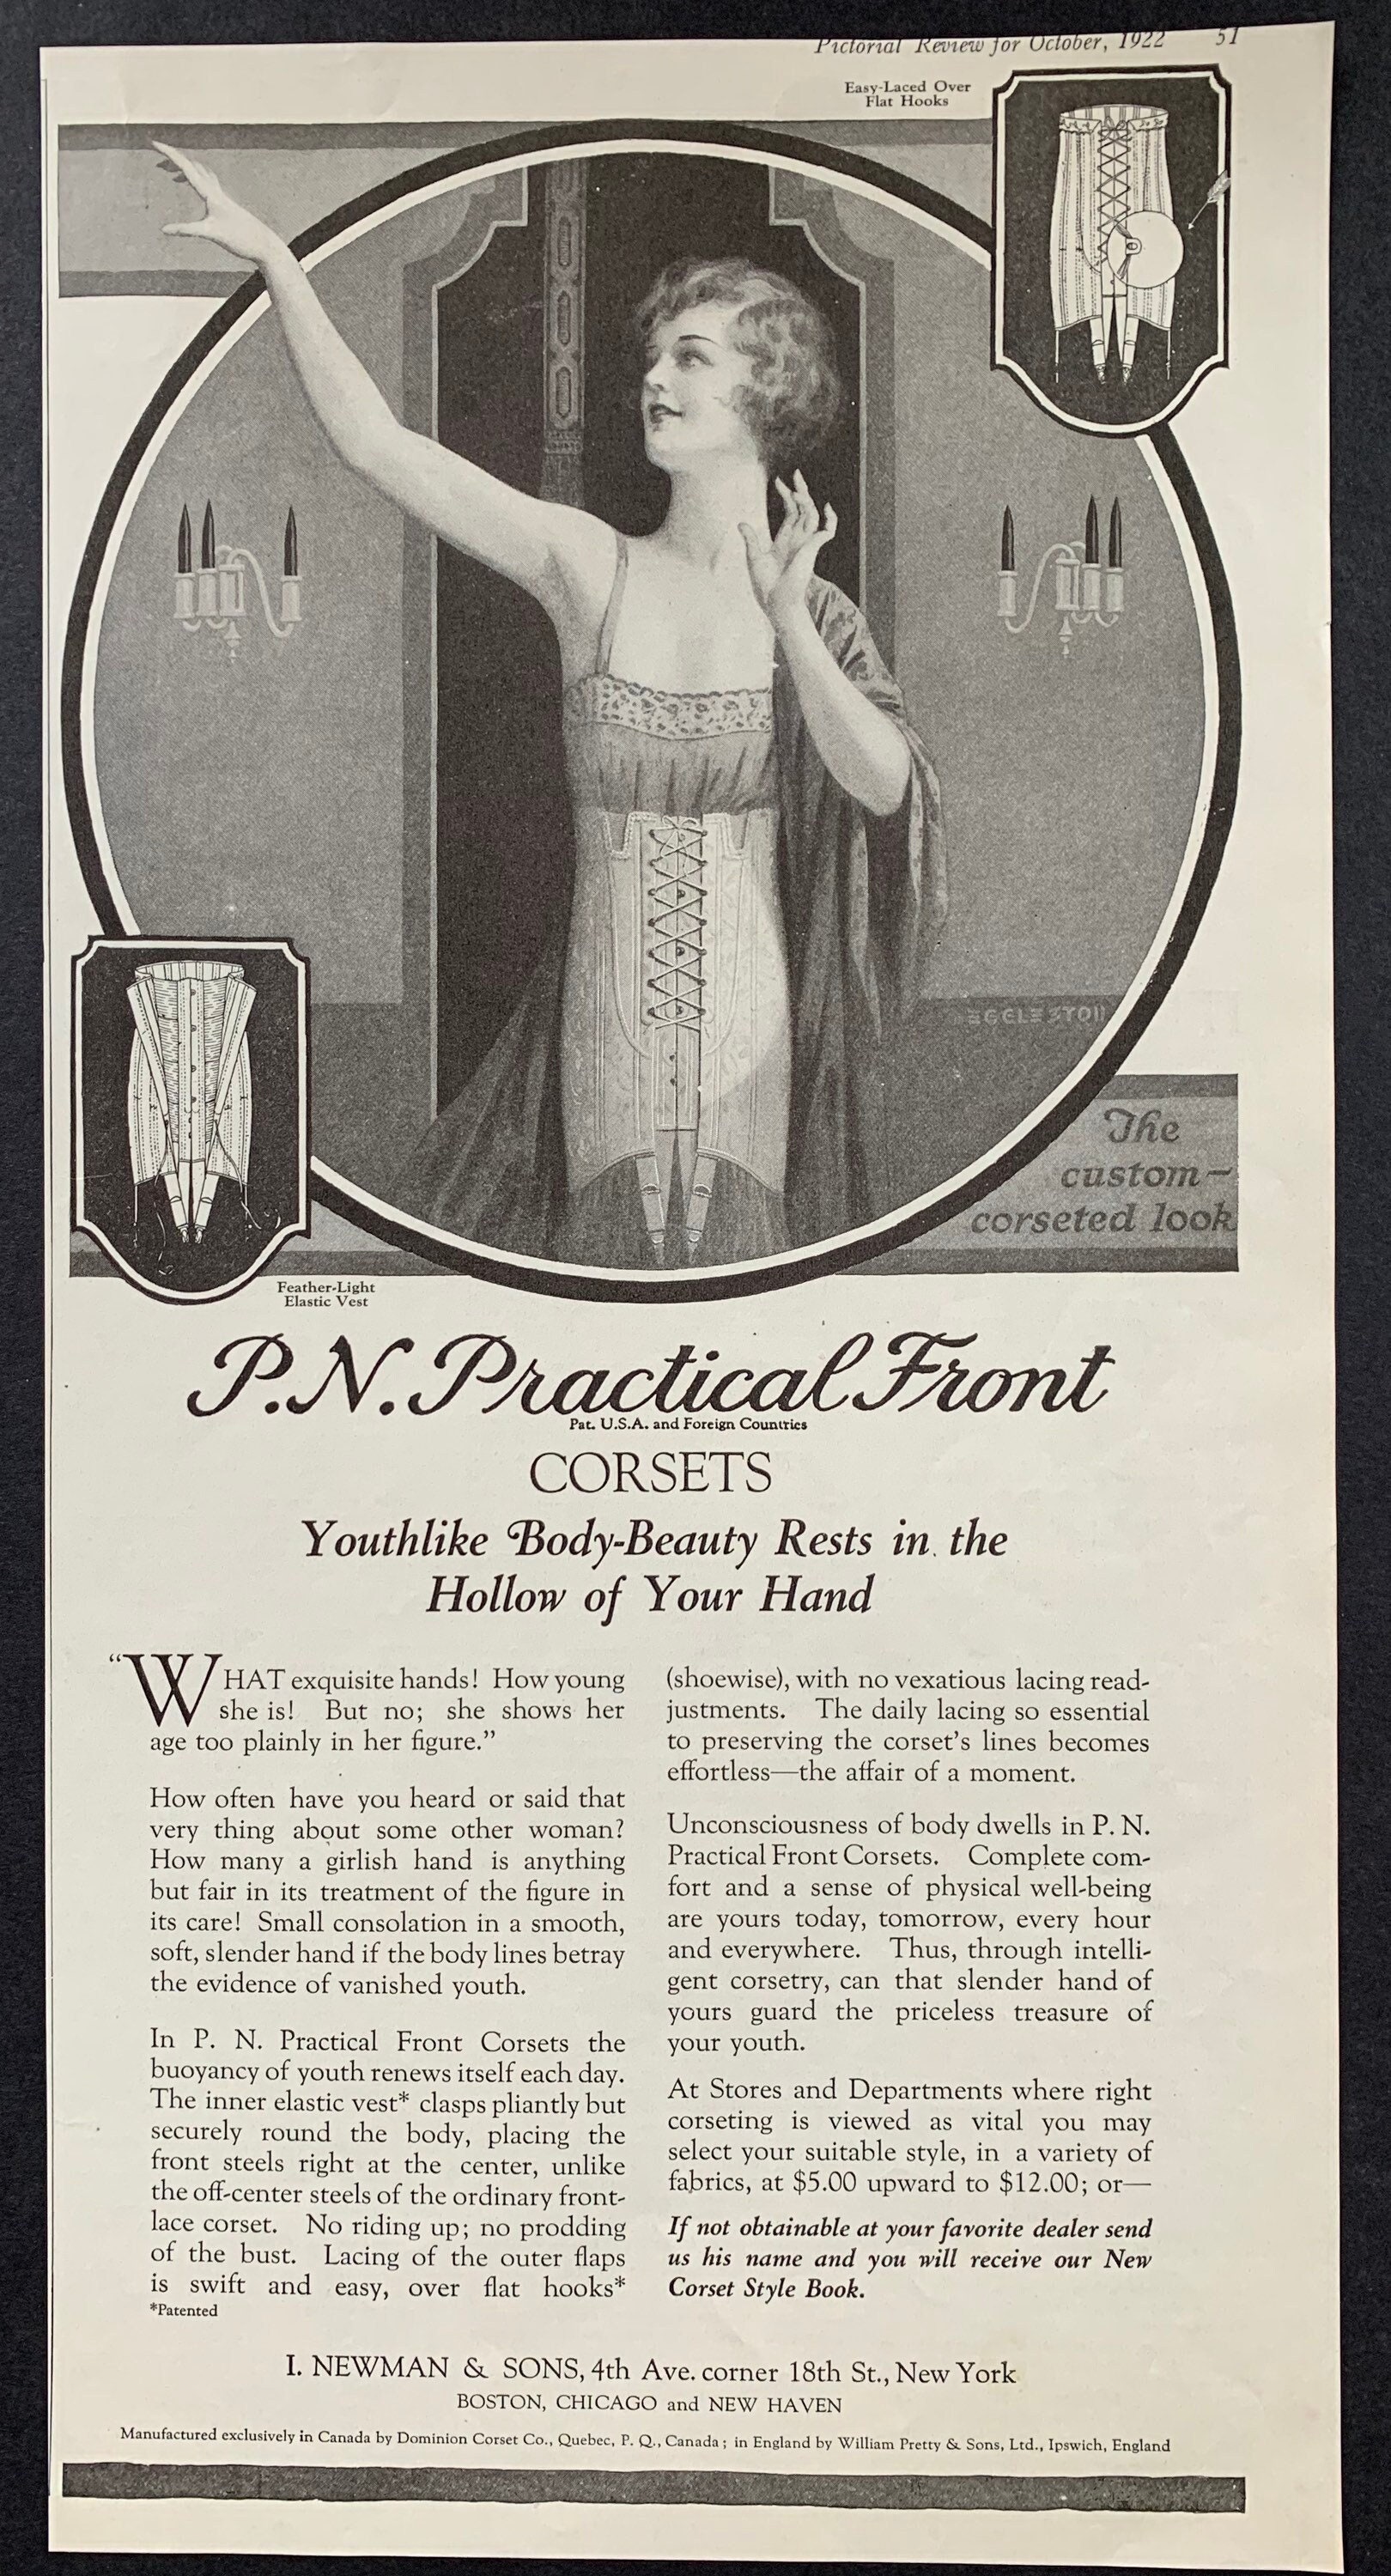 Vintage 1922 p. n. practical front corsets ad